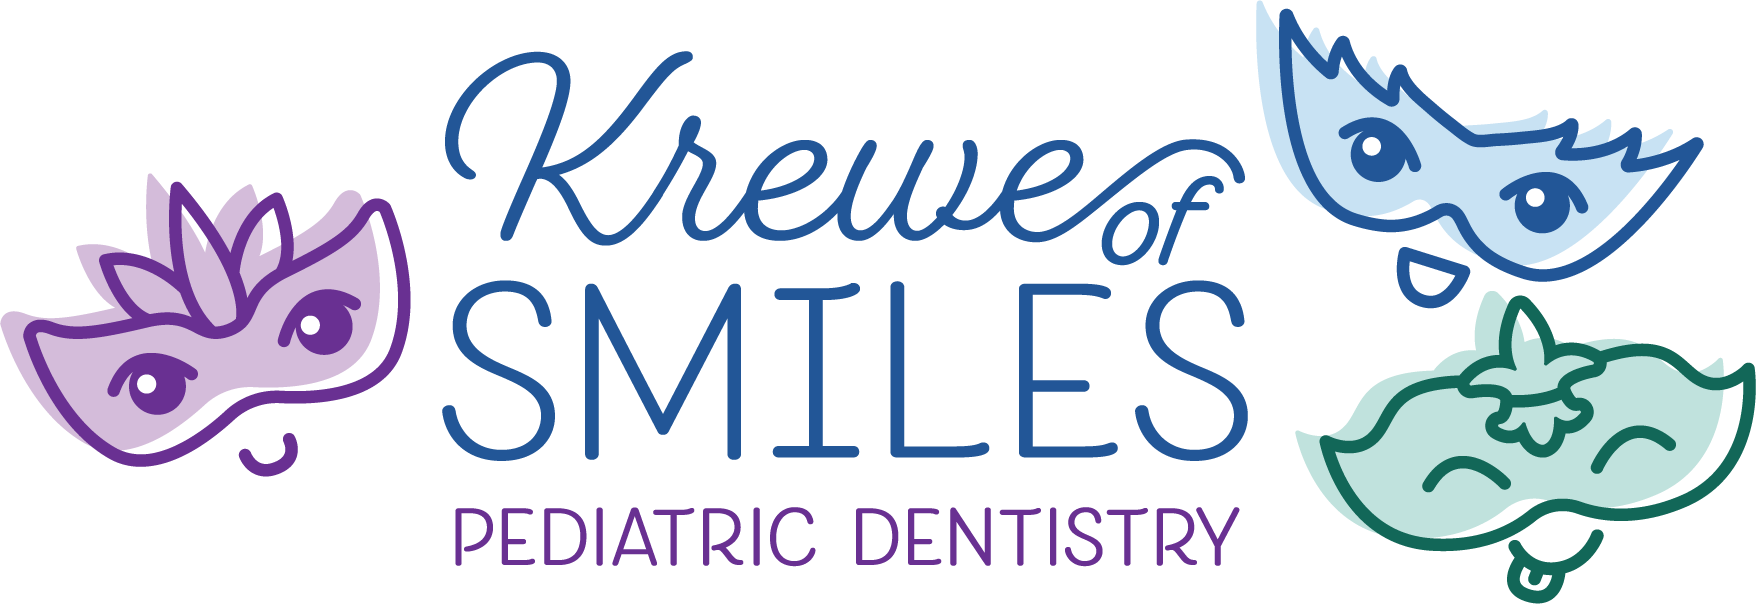 Pediatric Dentist New Orleans